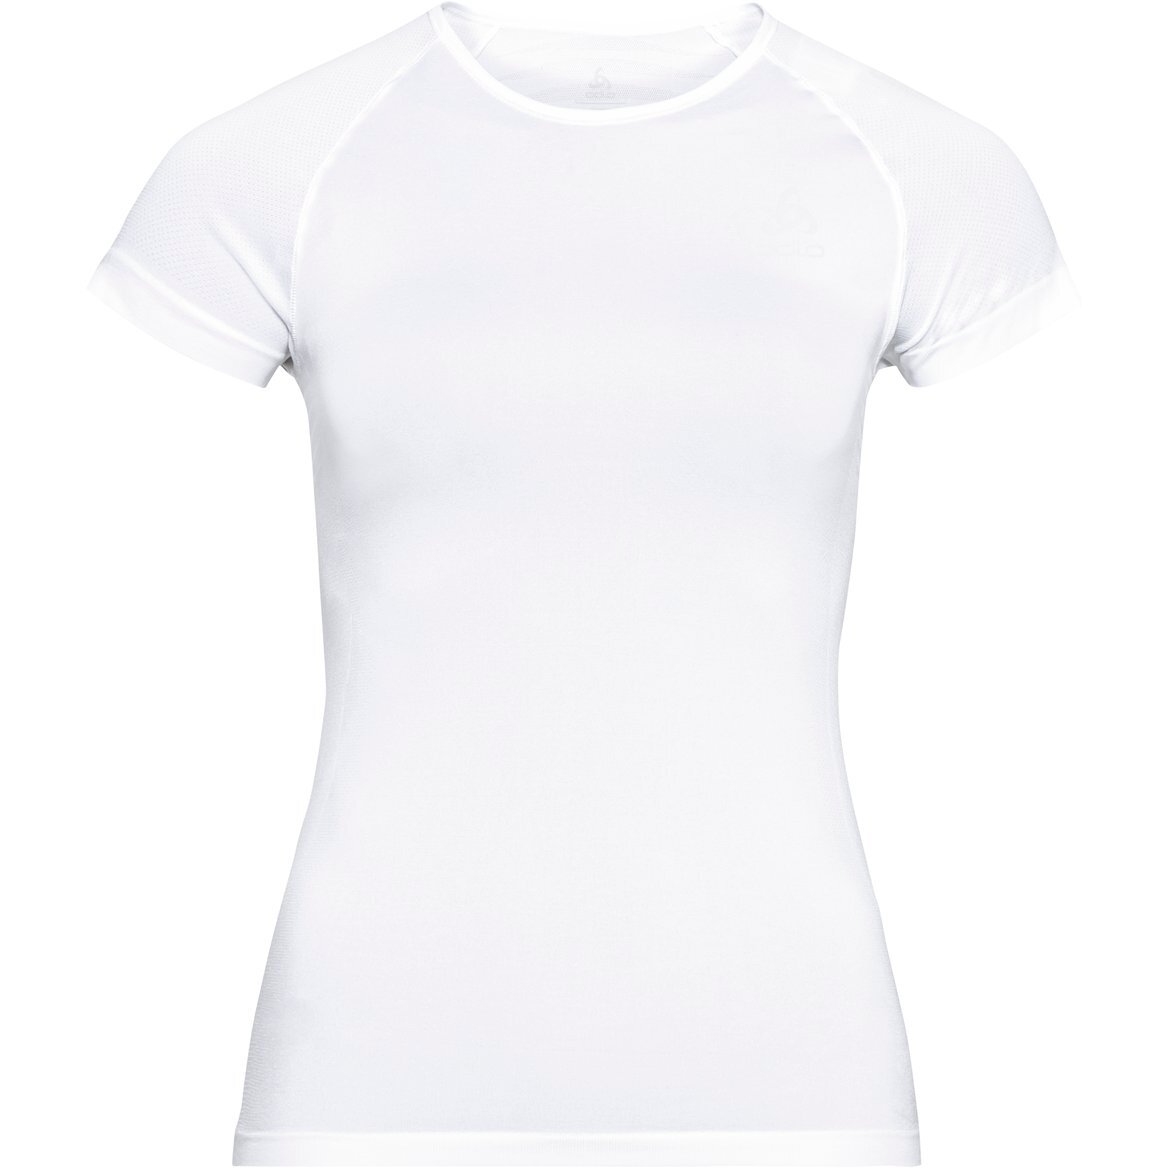 Produktbild von Odlo Performance X-Light Kurzarm-Unterhemd Damen - weiß